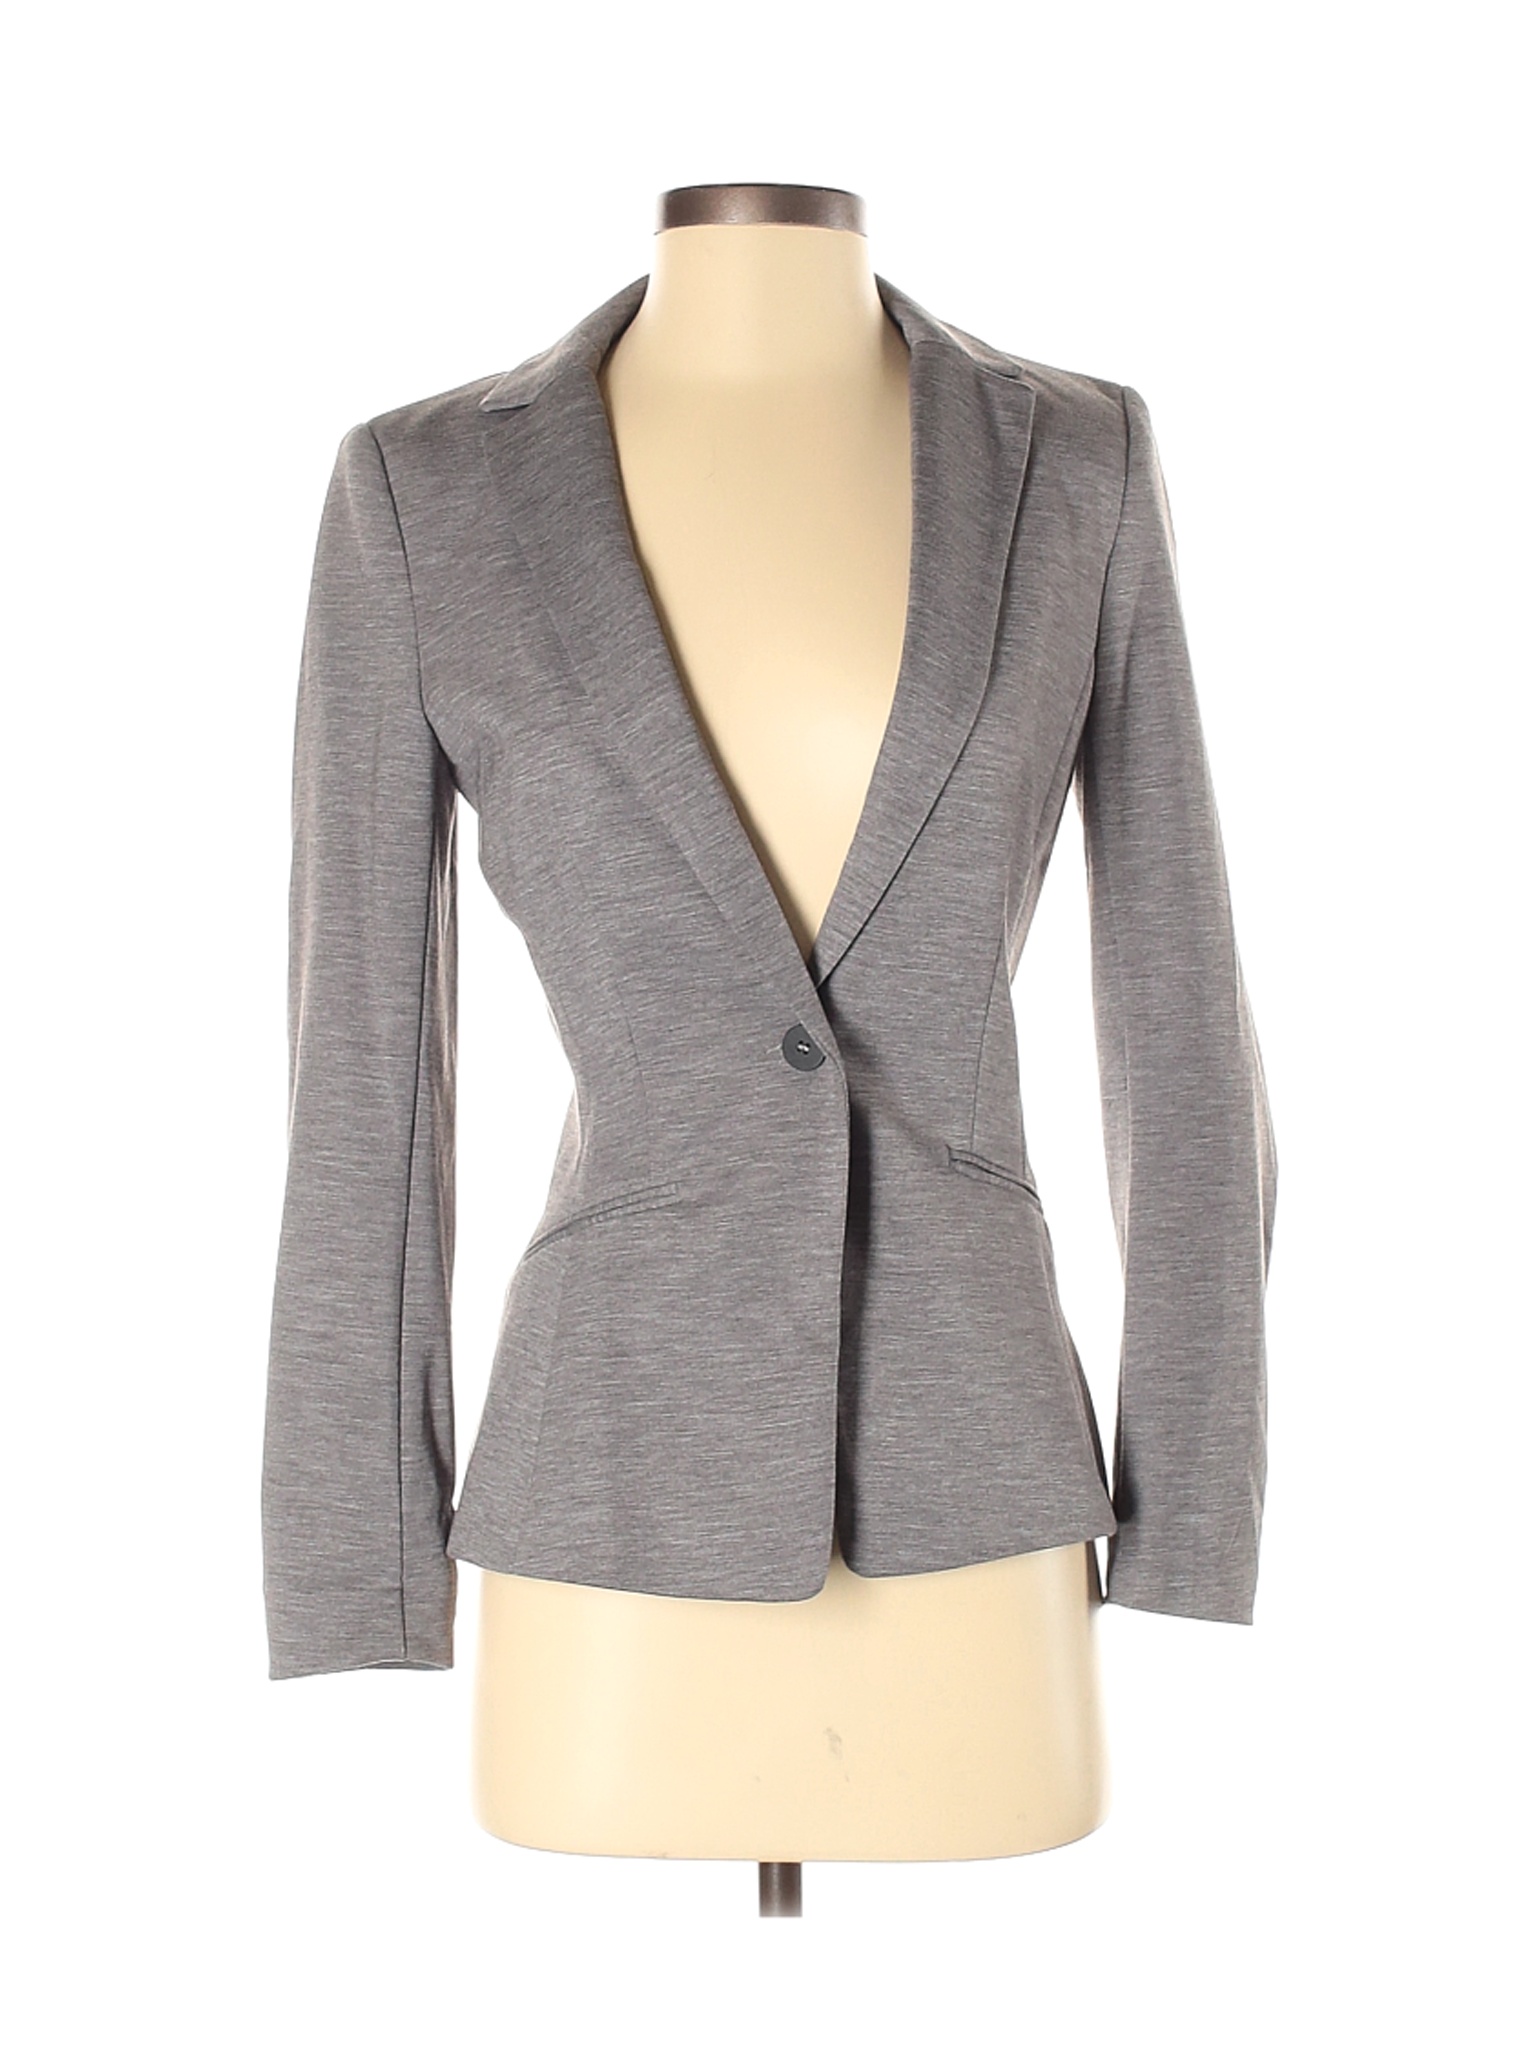 H&M Women Gray Blazer 4 | eBay